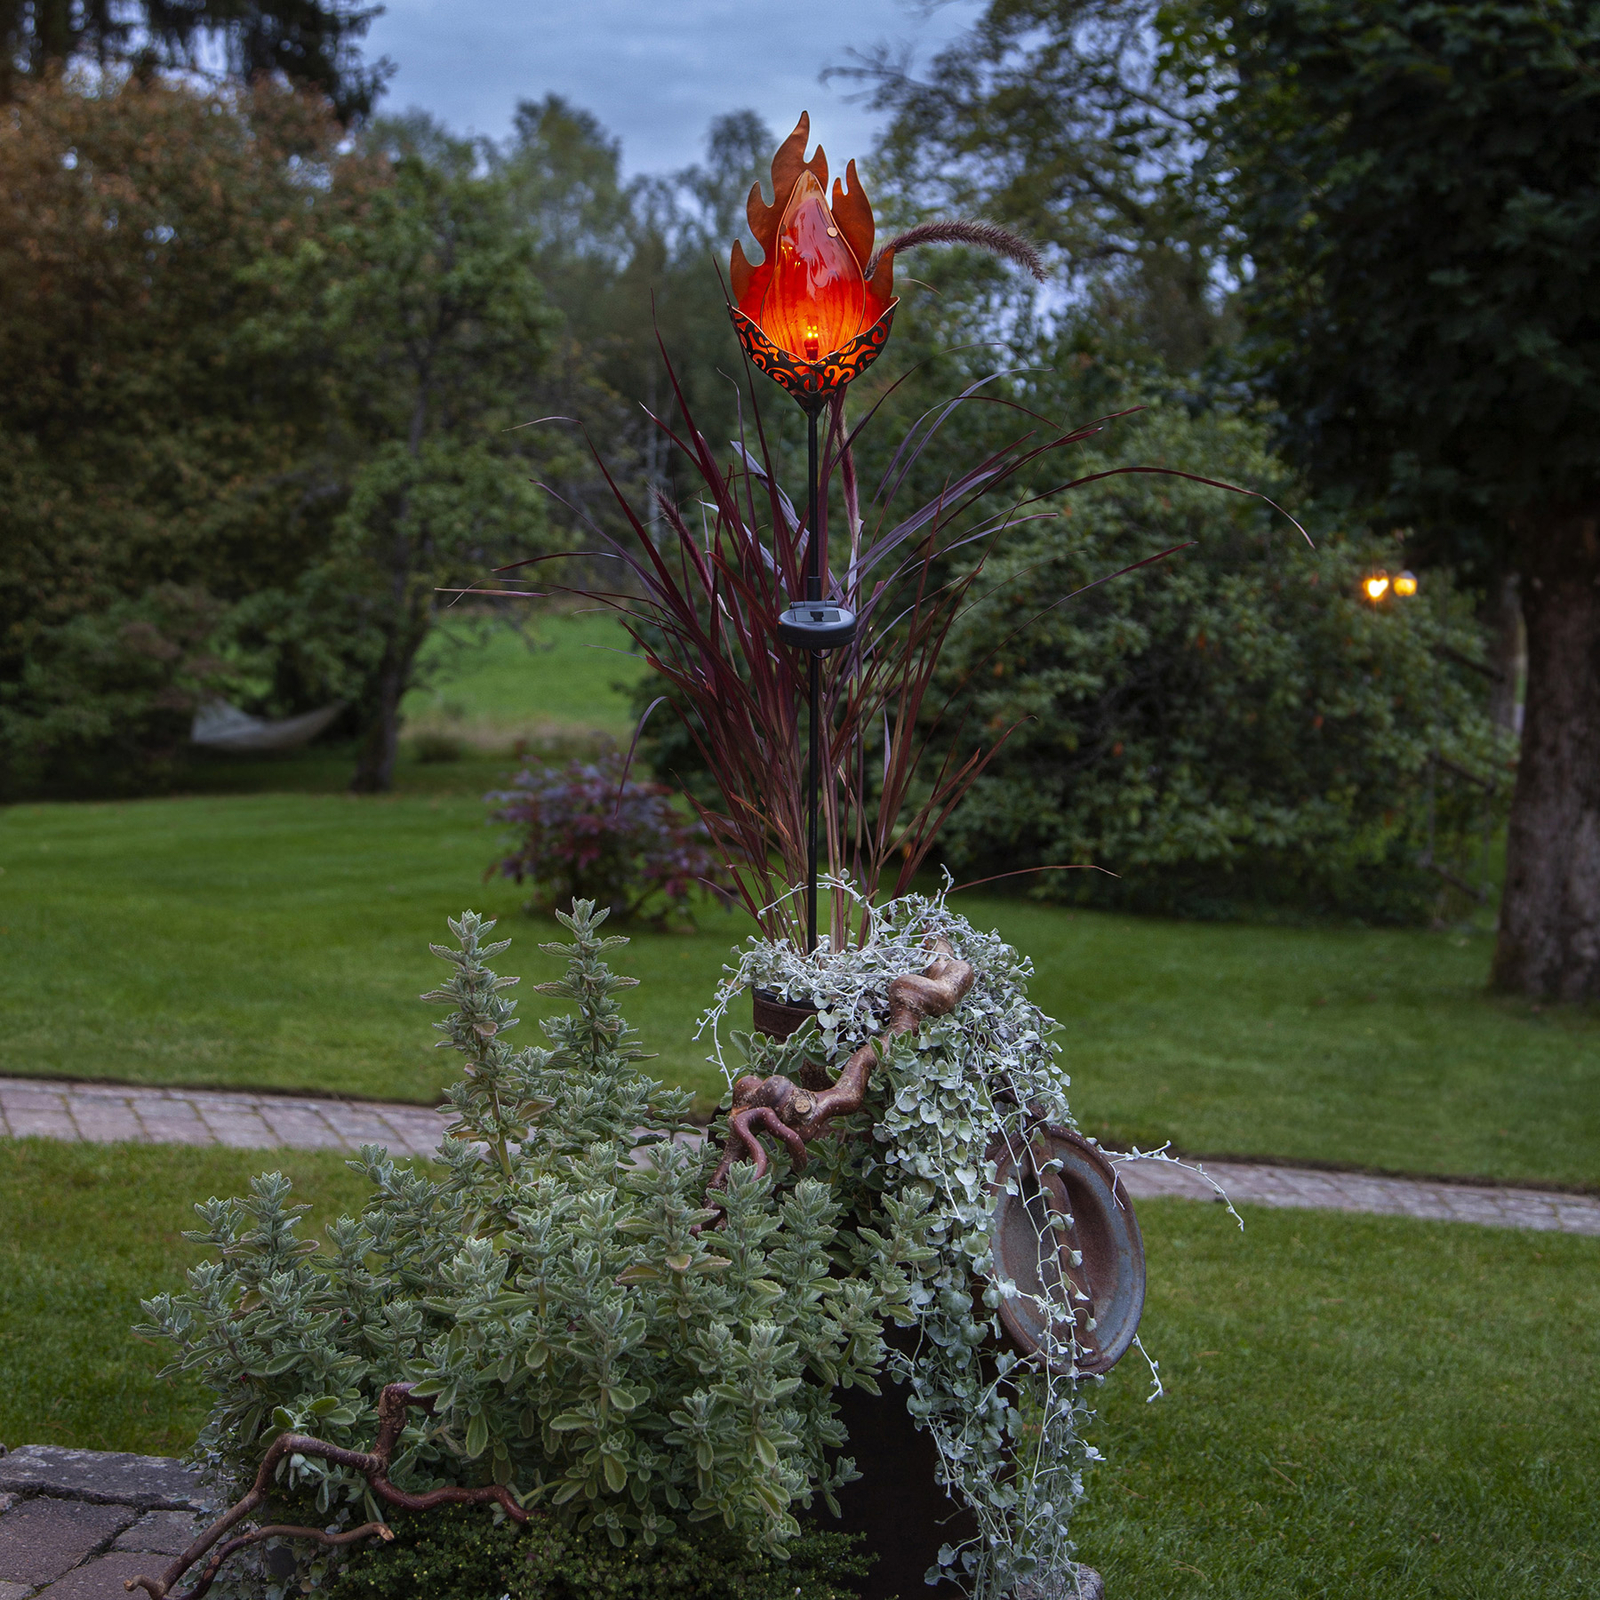 Lampe solaire LED Melilla Flame forme flamme